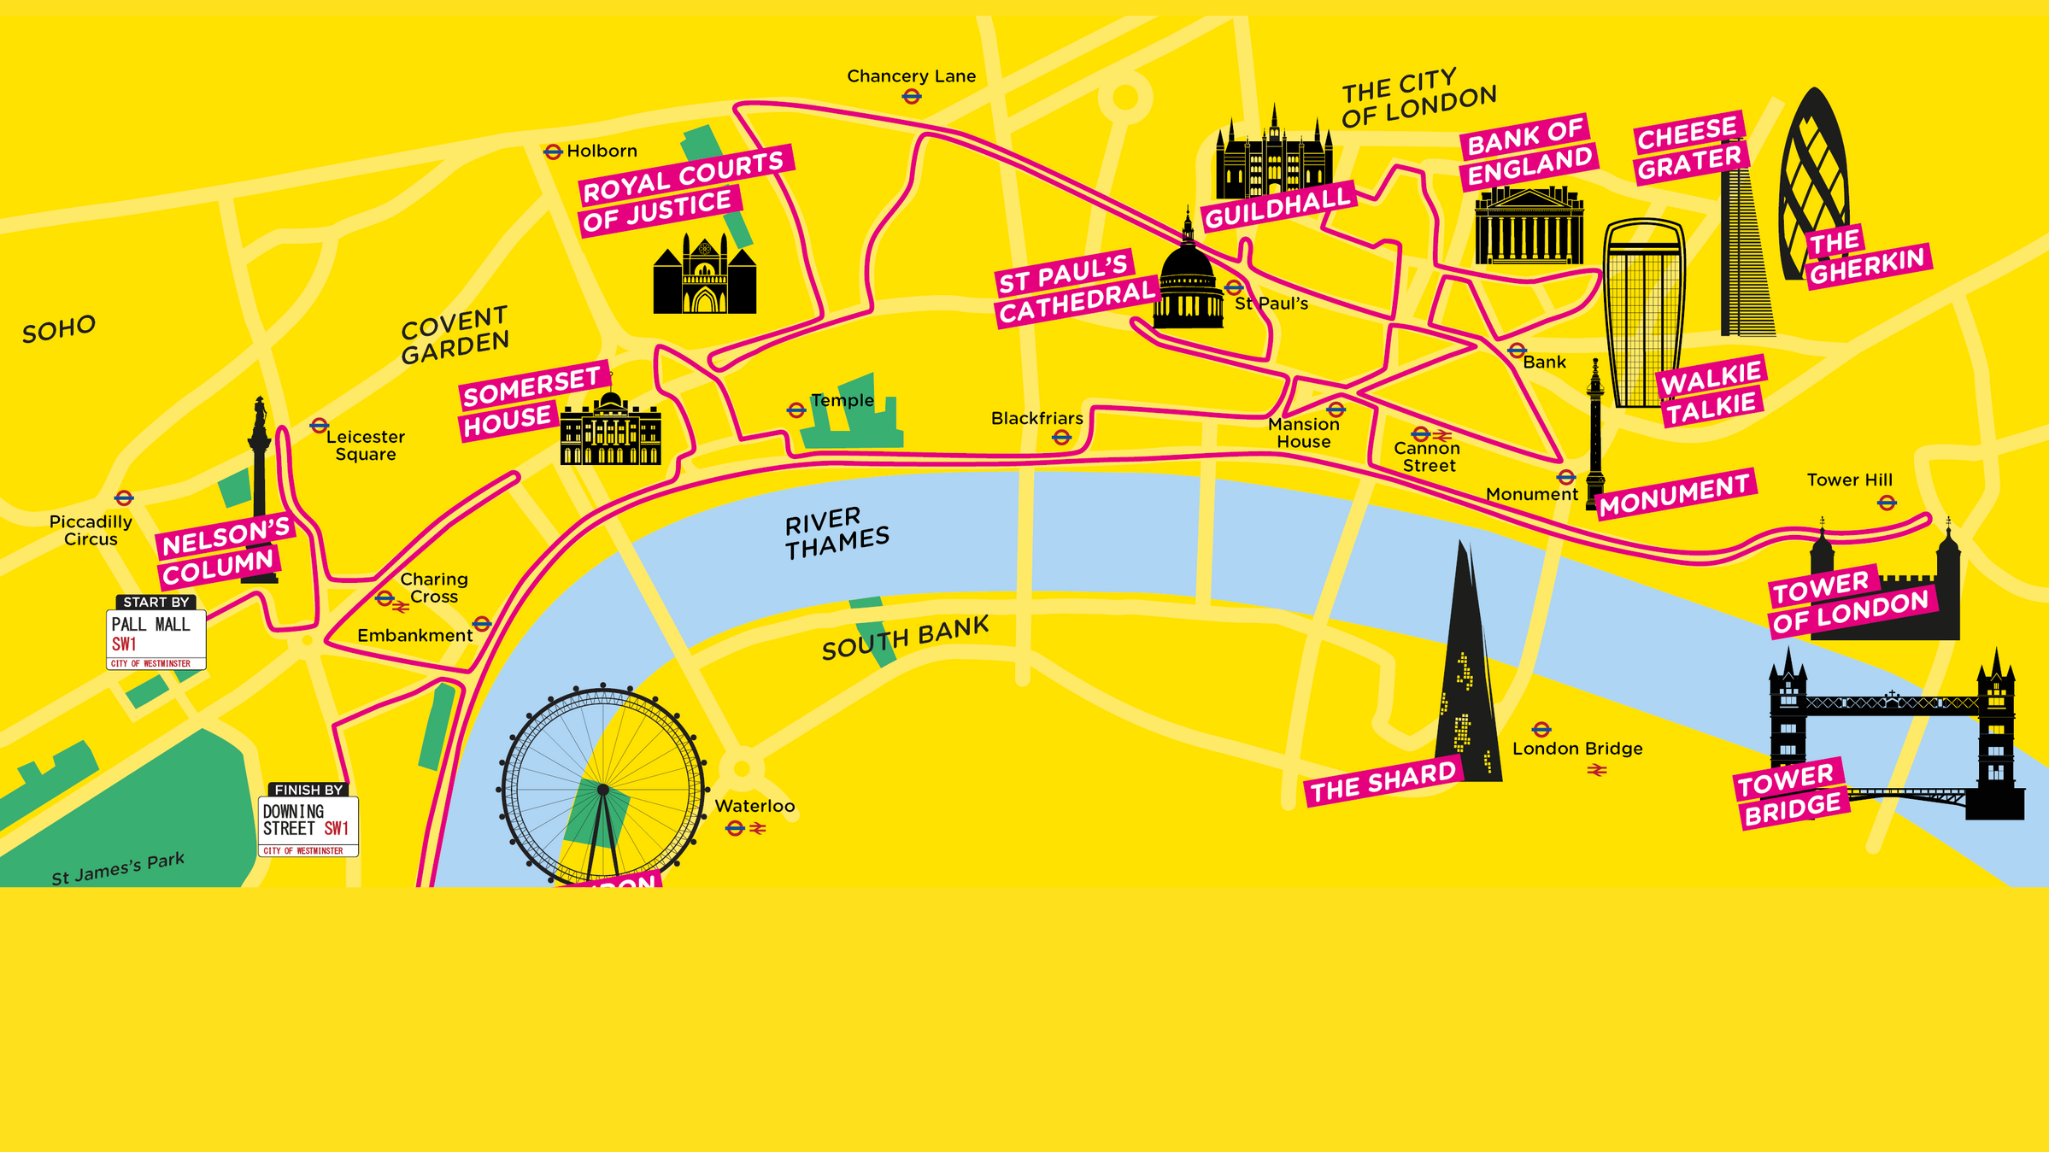 London Landmarks Half Marathon